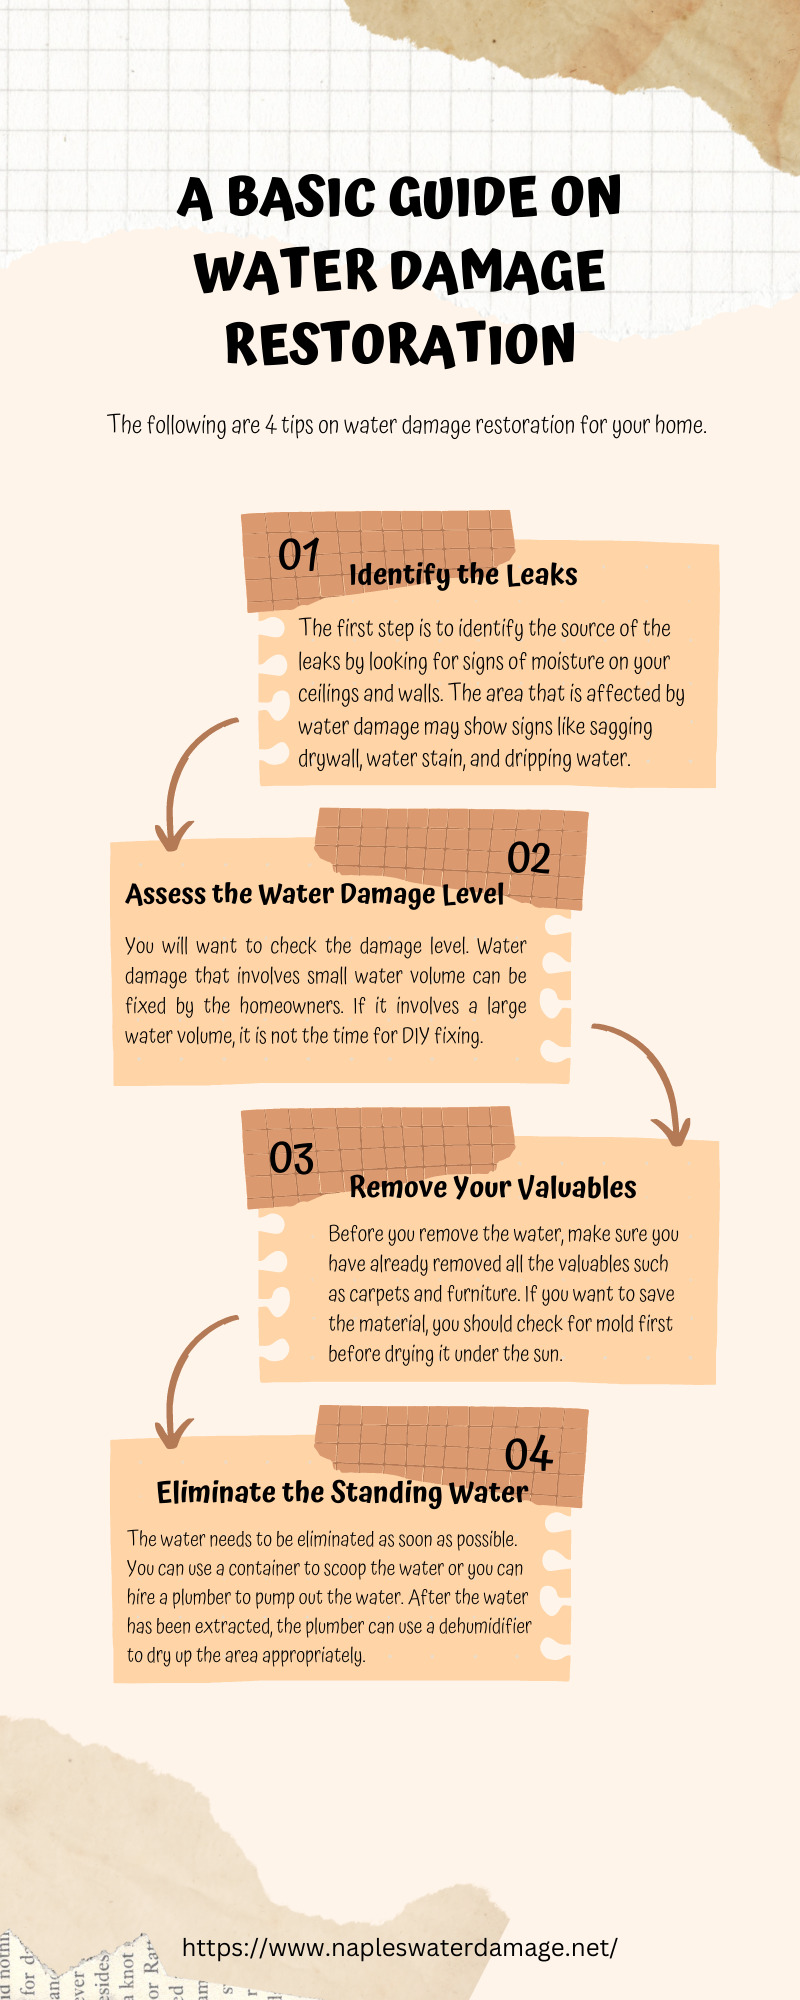 A BASIC GUIDE ON WATER DAMAGE RESTORATION